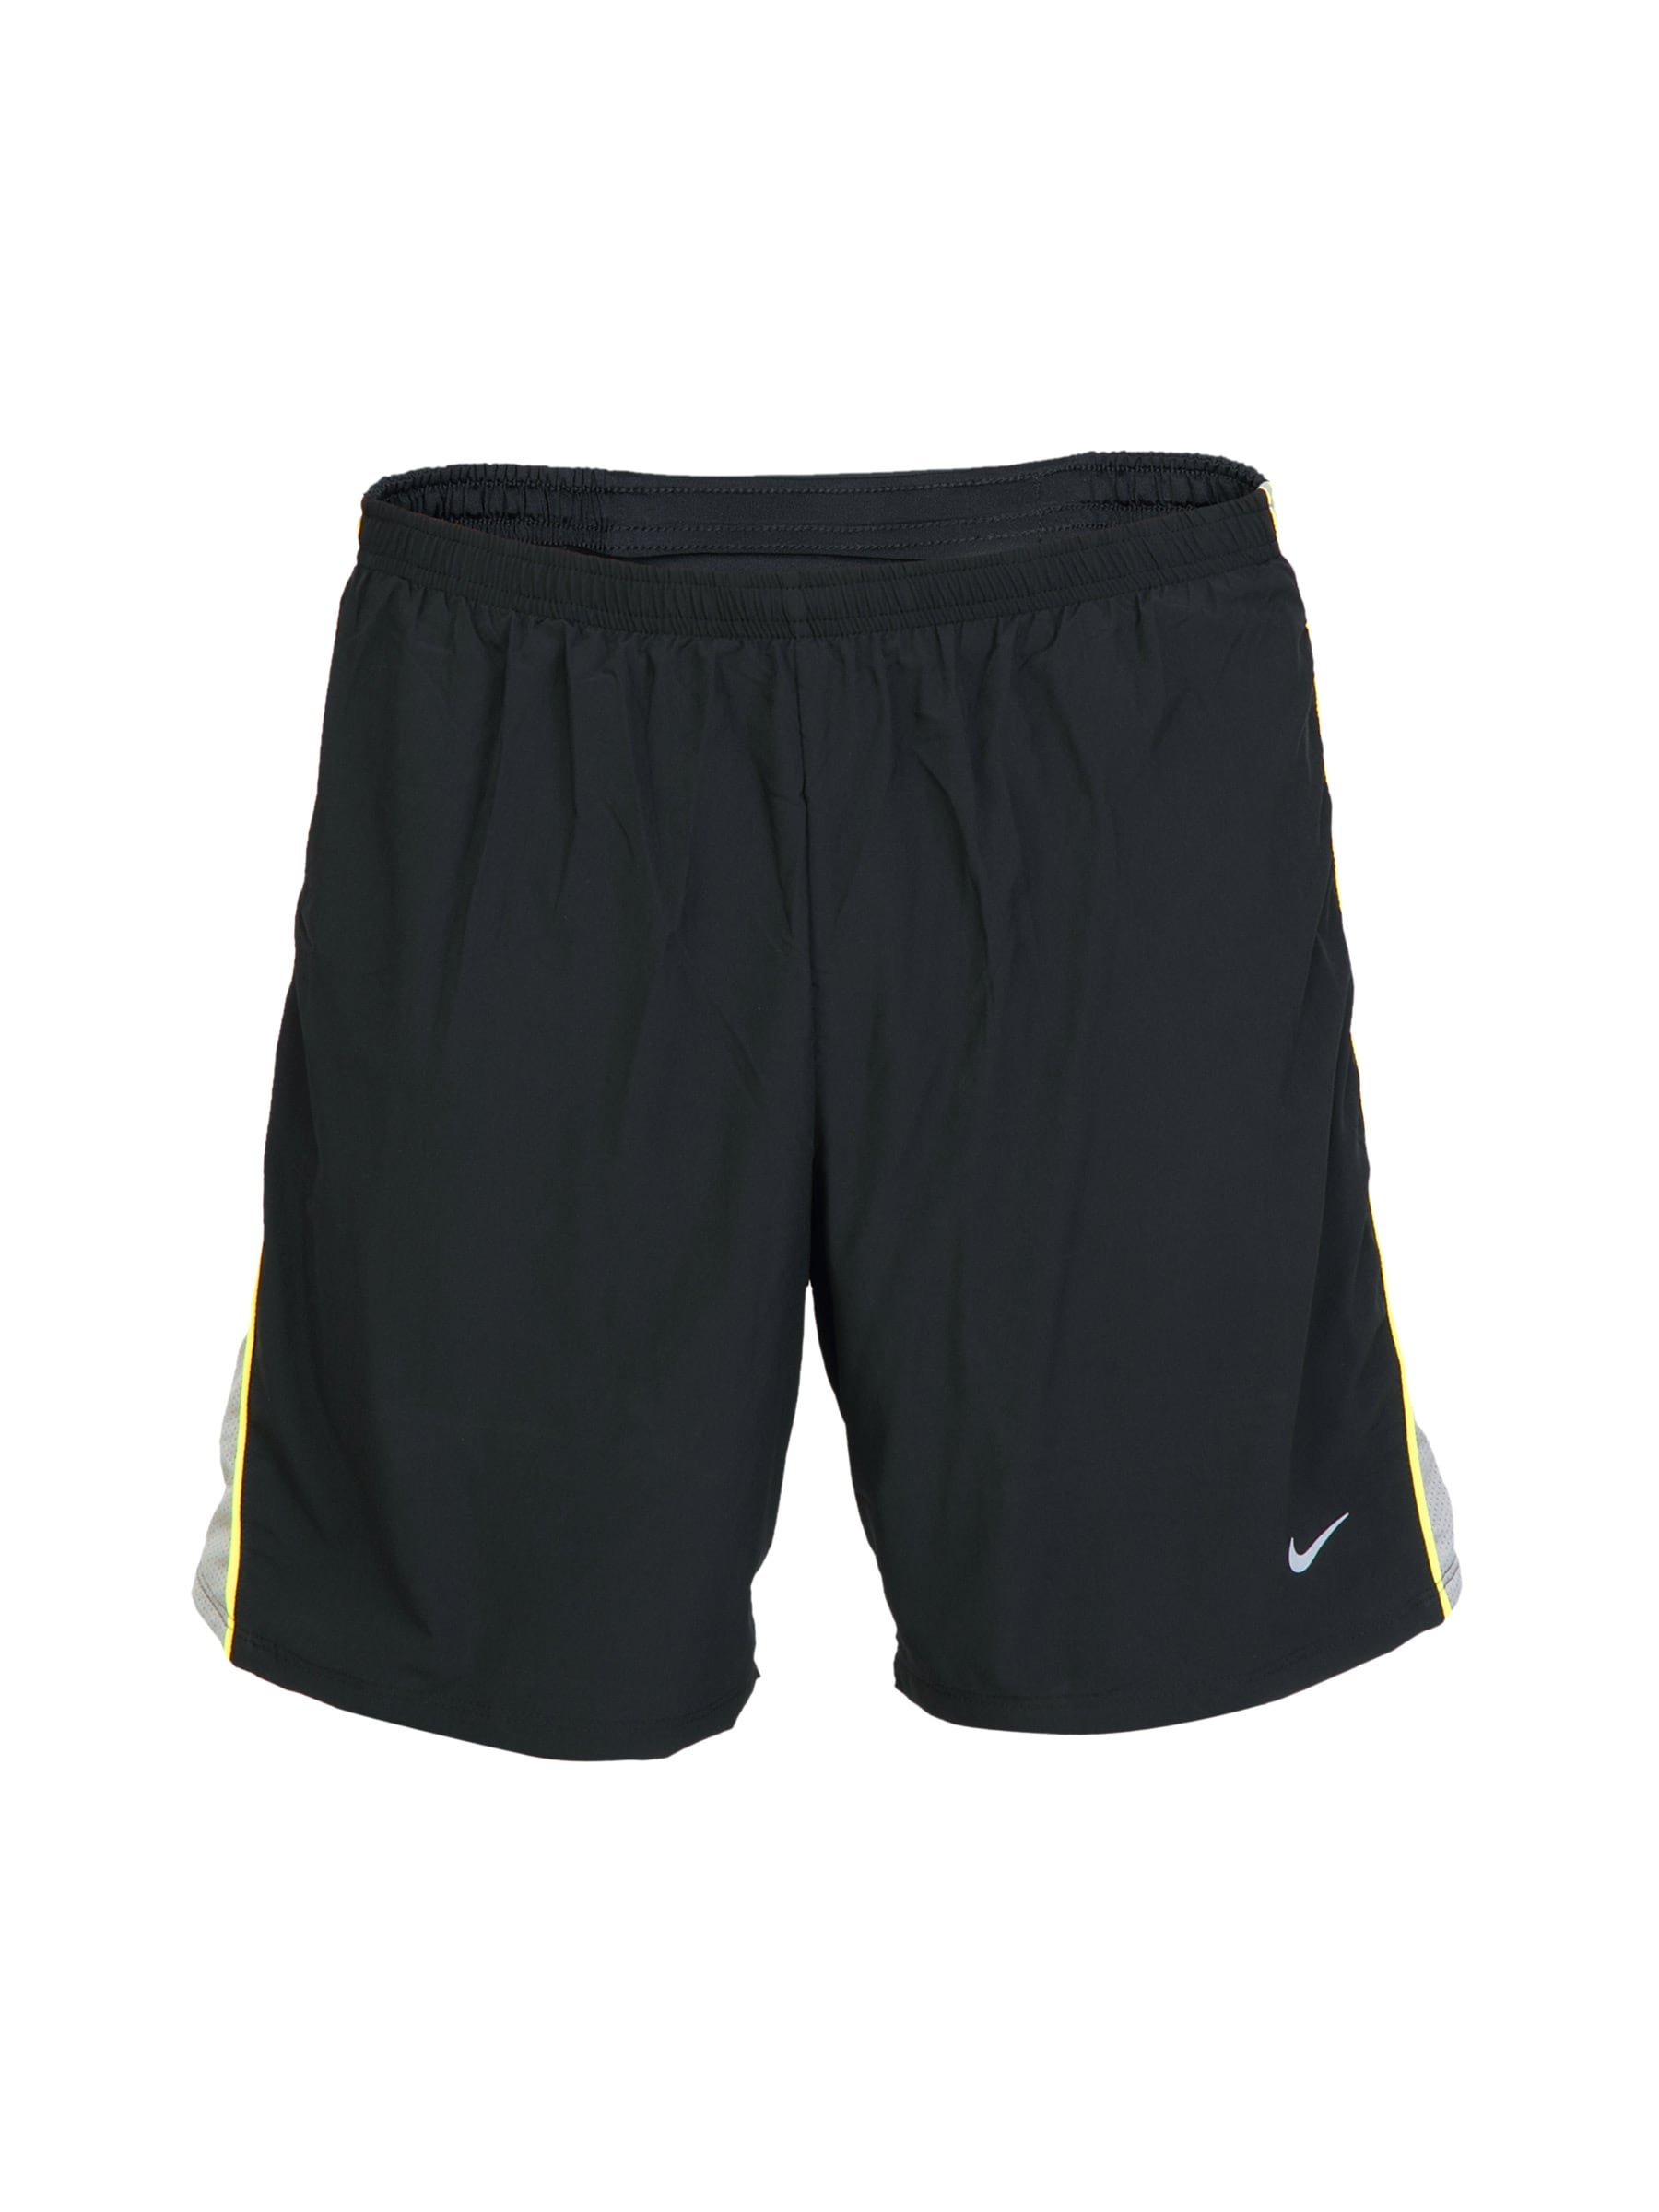 Nike Men Solid Black Shorts